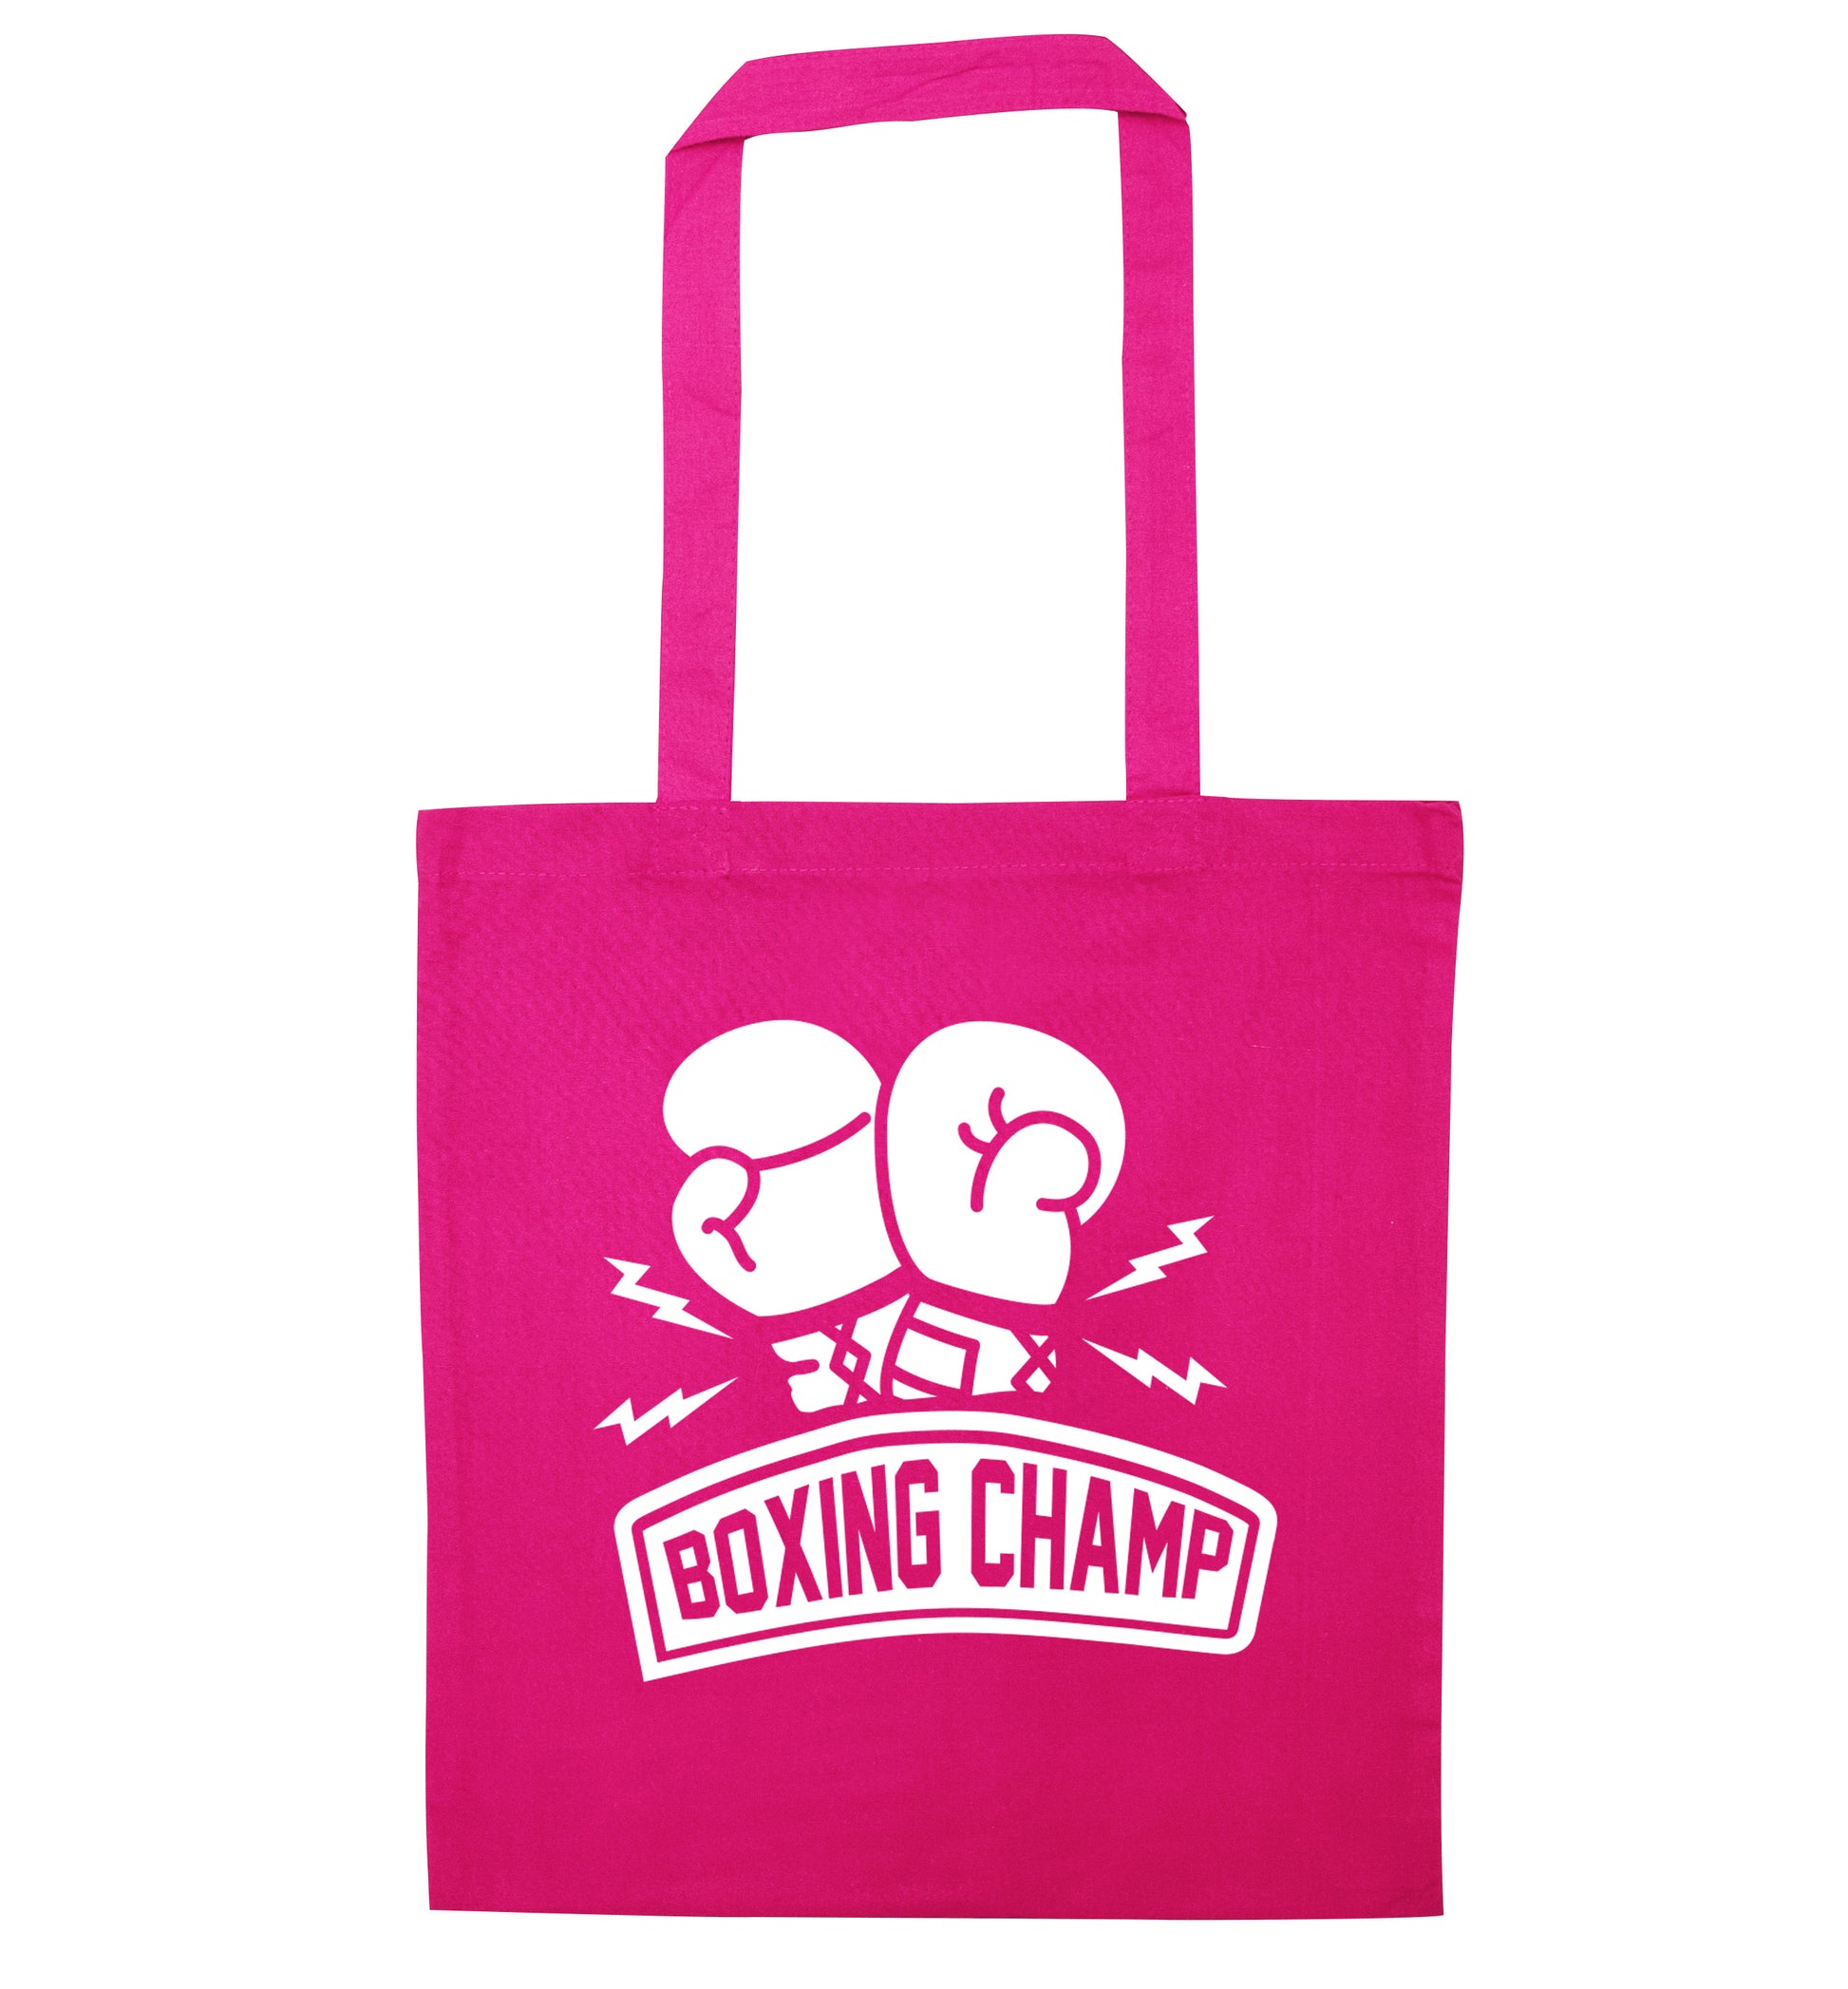 Boxing Champ pink tote bag